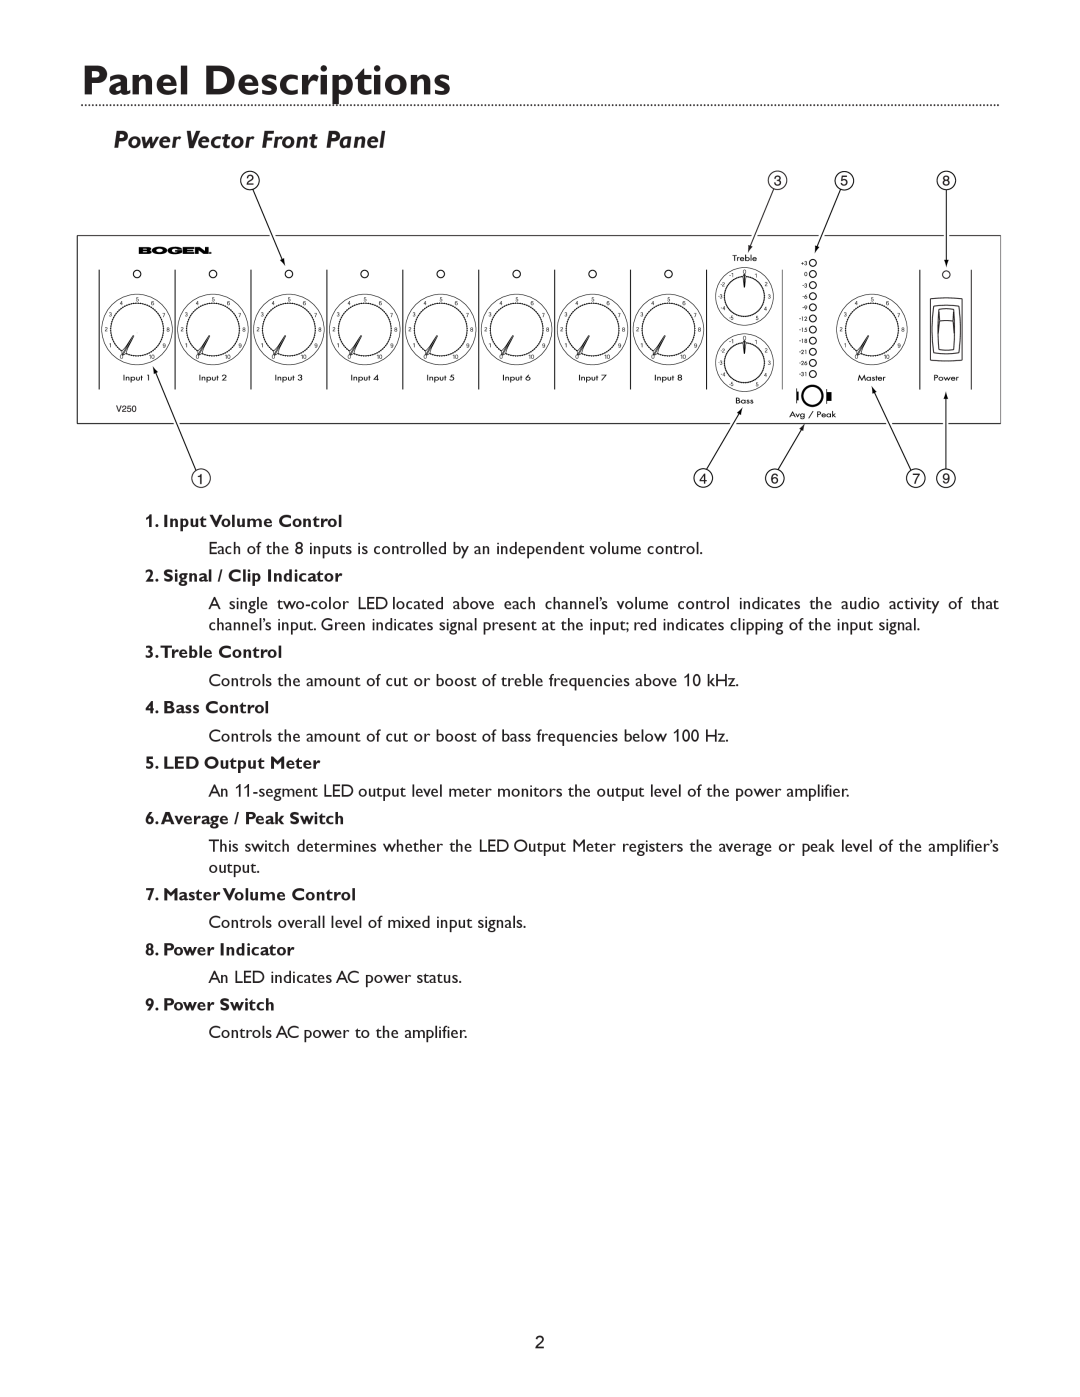 Bogen V60 Panel Descriptions, Power Vector Front Panel, Input Volume Control, Signal / Clip Indicator, Treble Control 